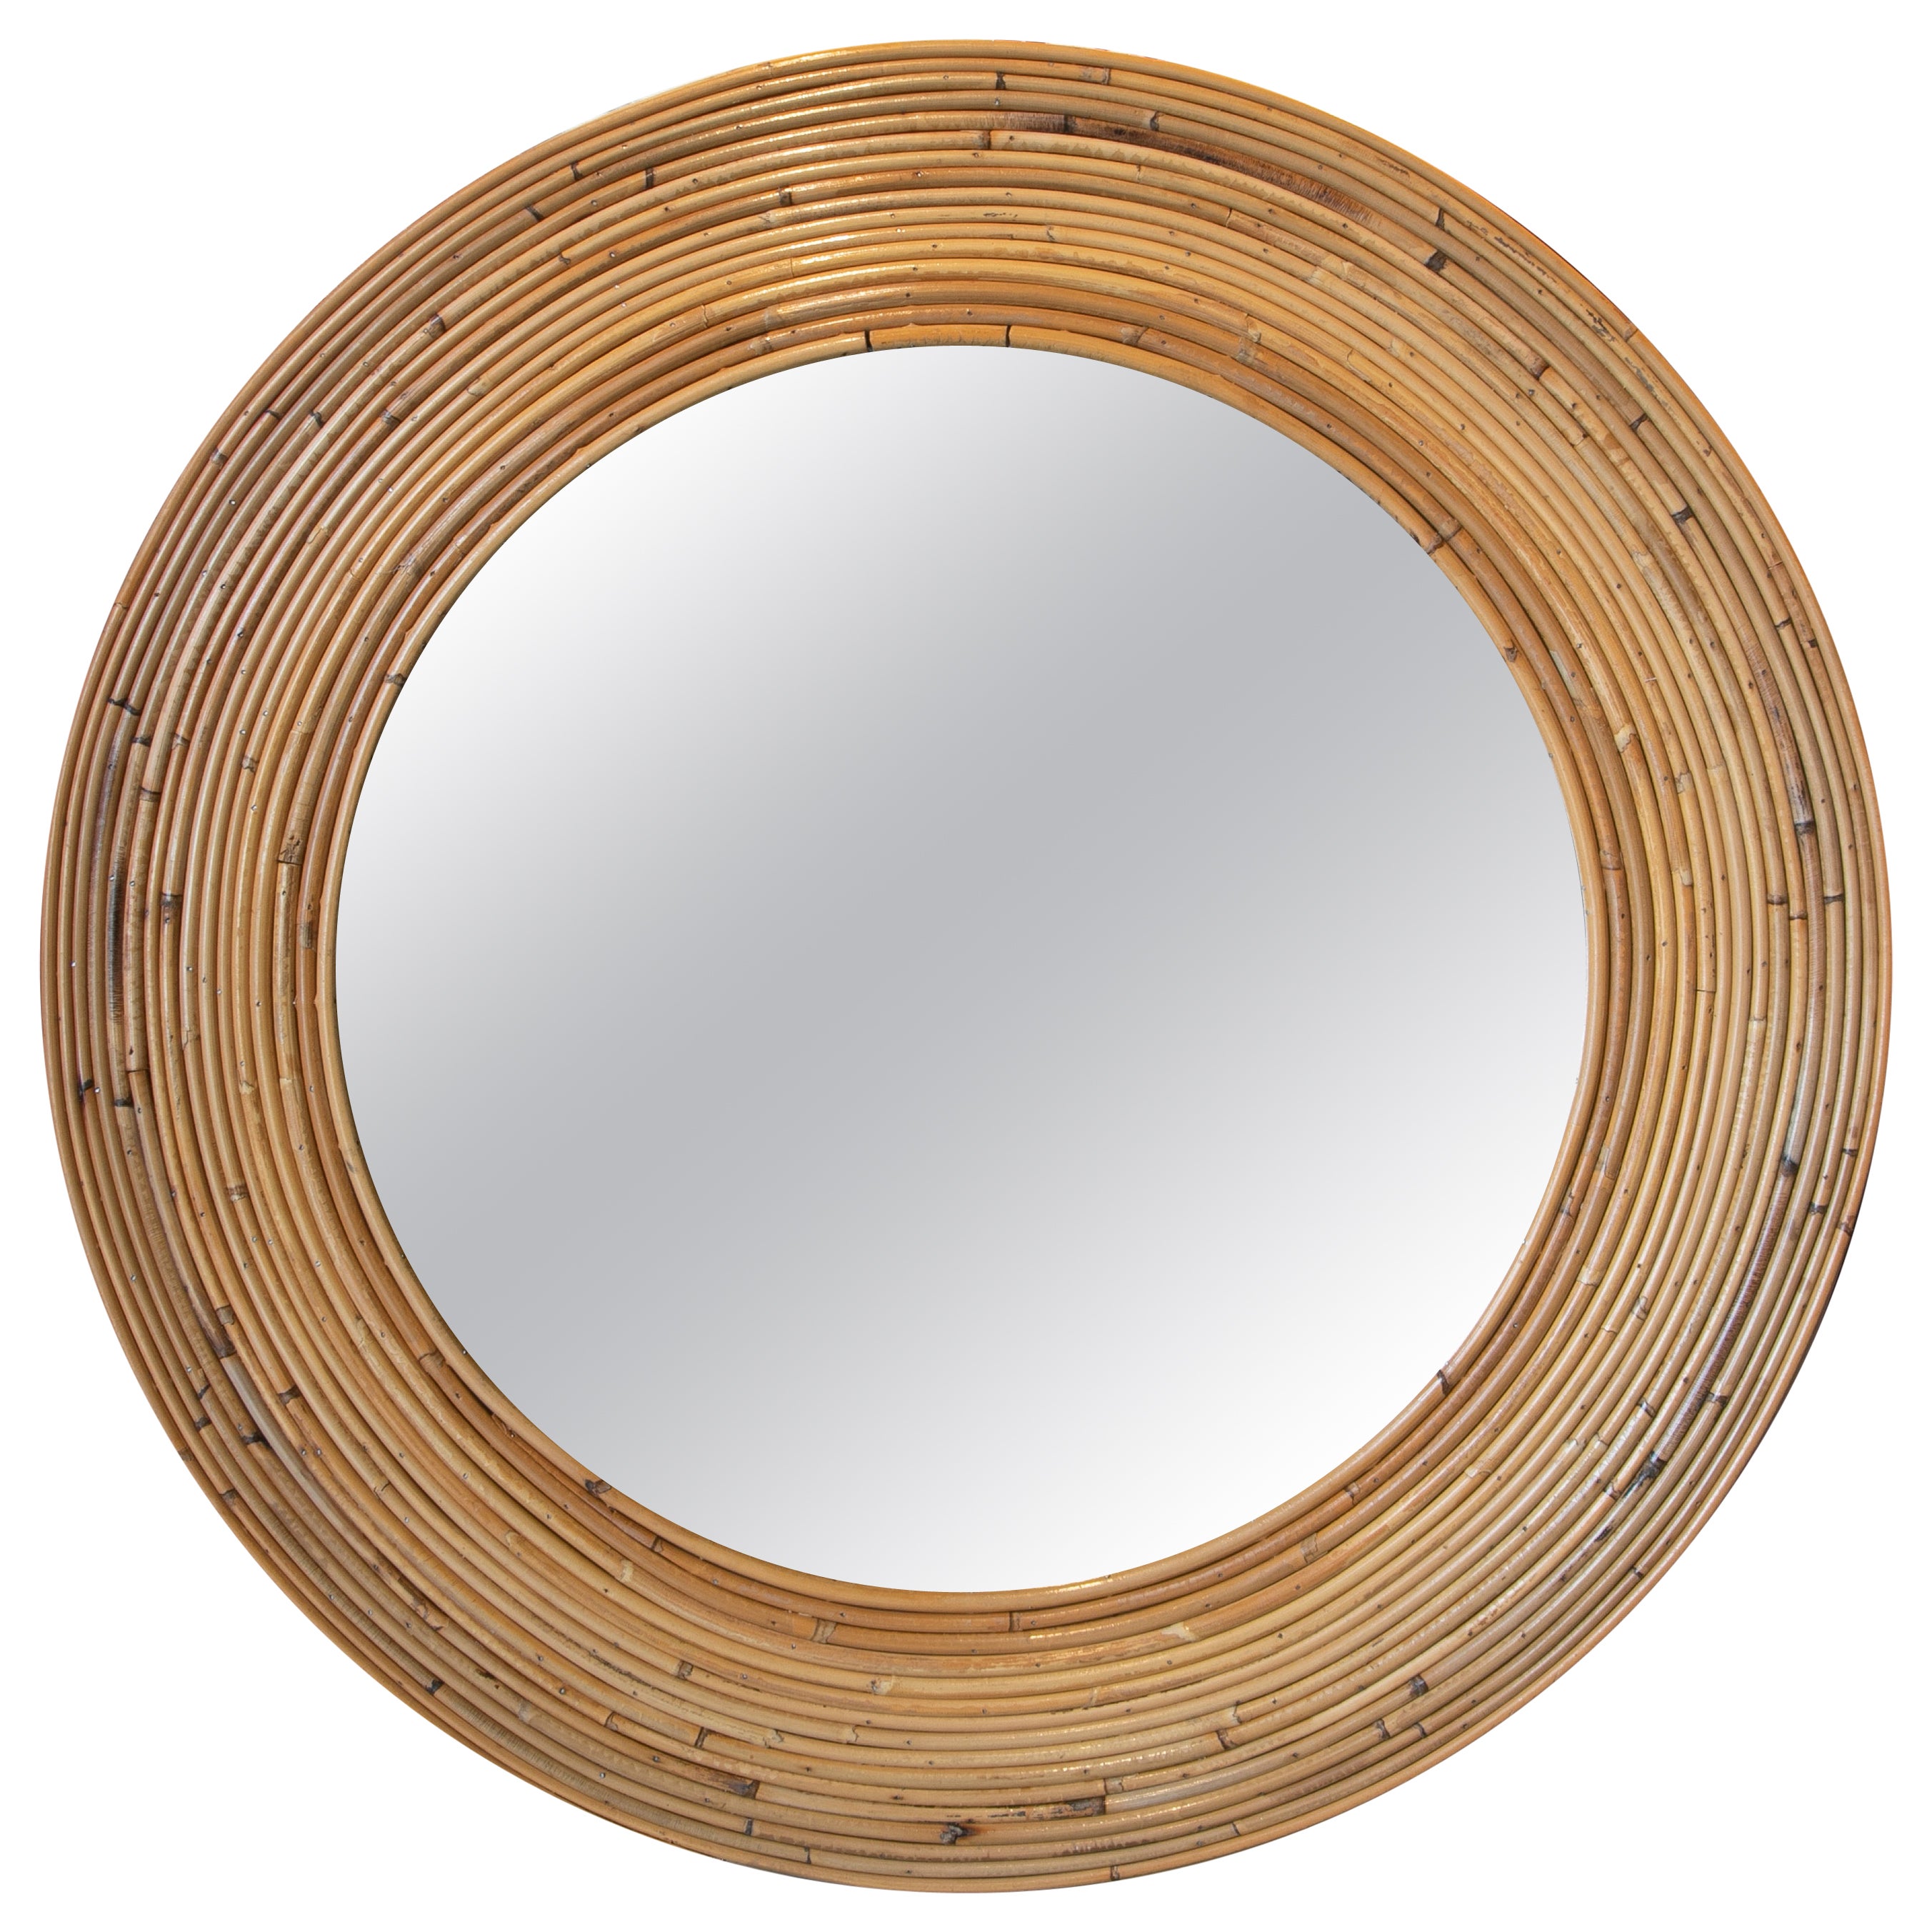 Handmade Round Bamboo Mirror For Sale